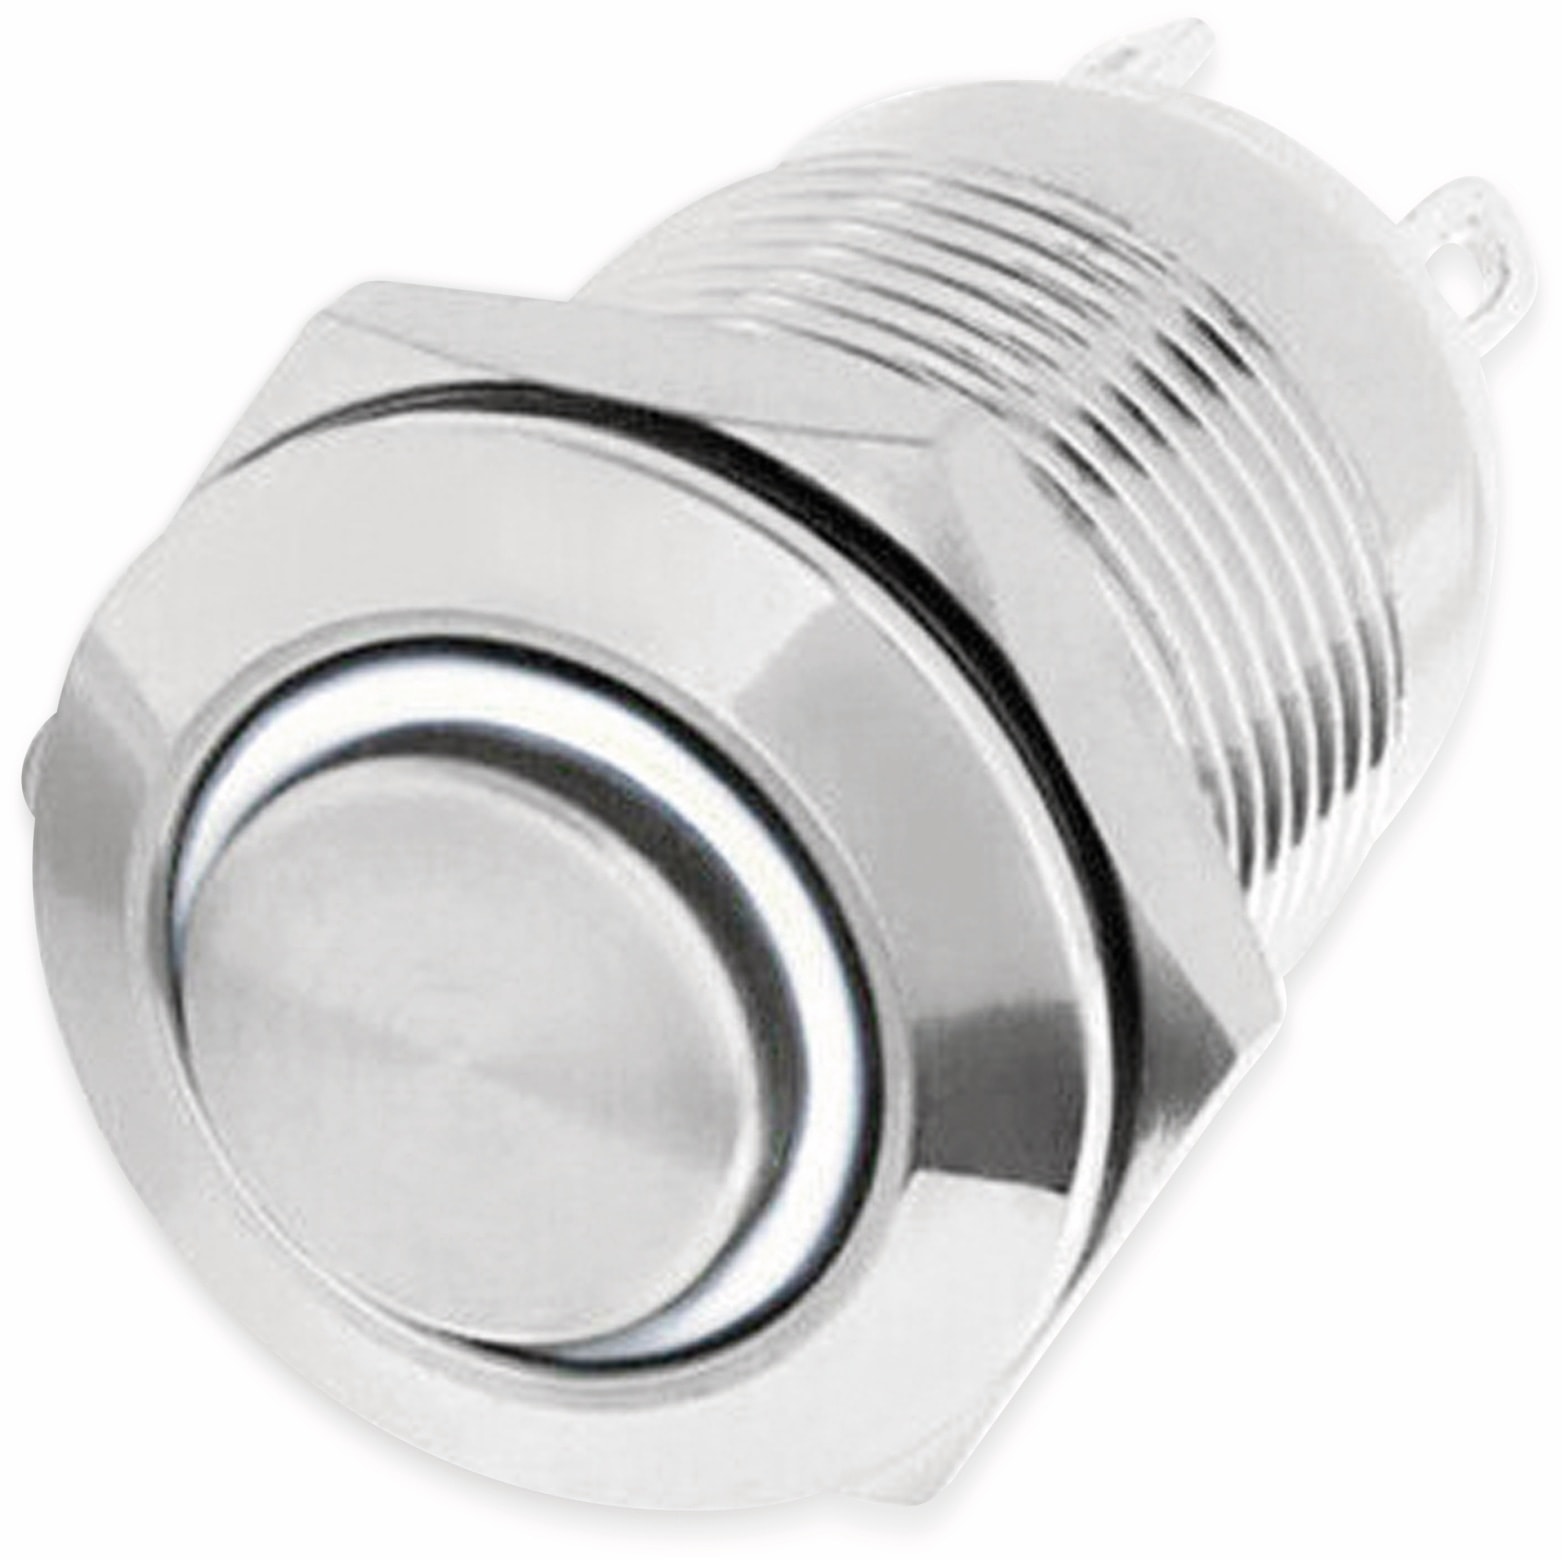 LED-Druckschalter, Ringbeleuchtung weiß 12 V, Ø12 mm, 2 A/48 V